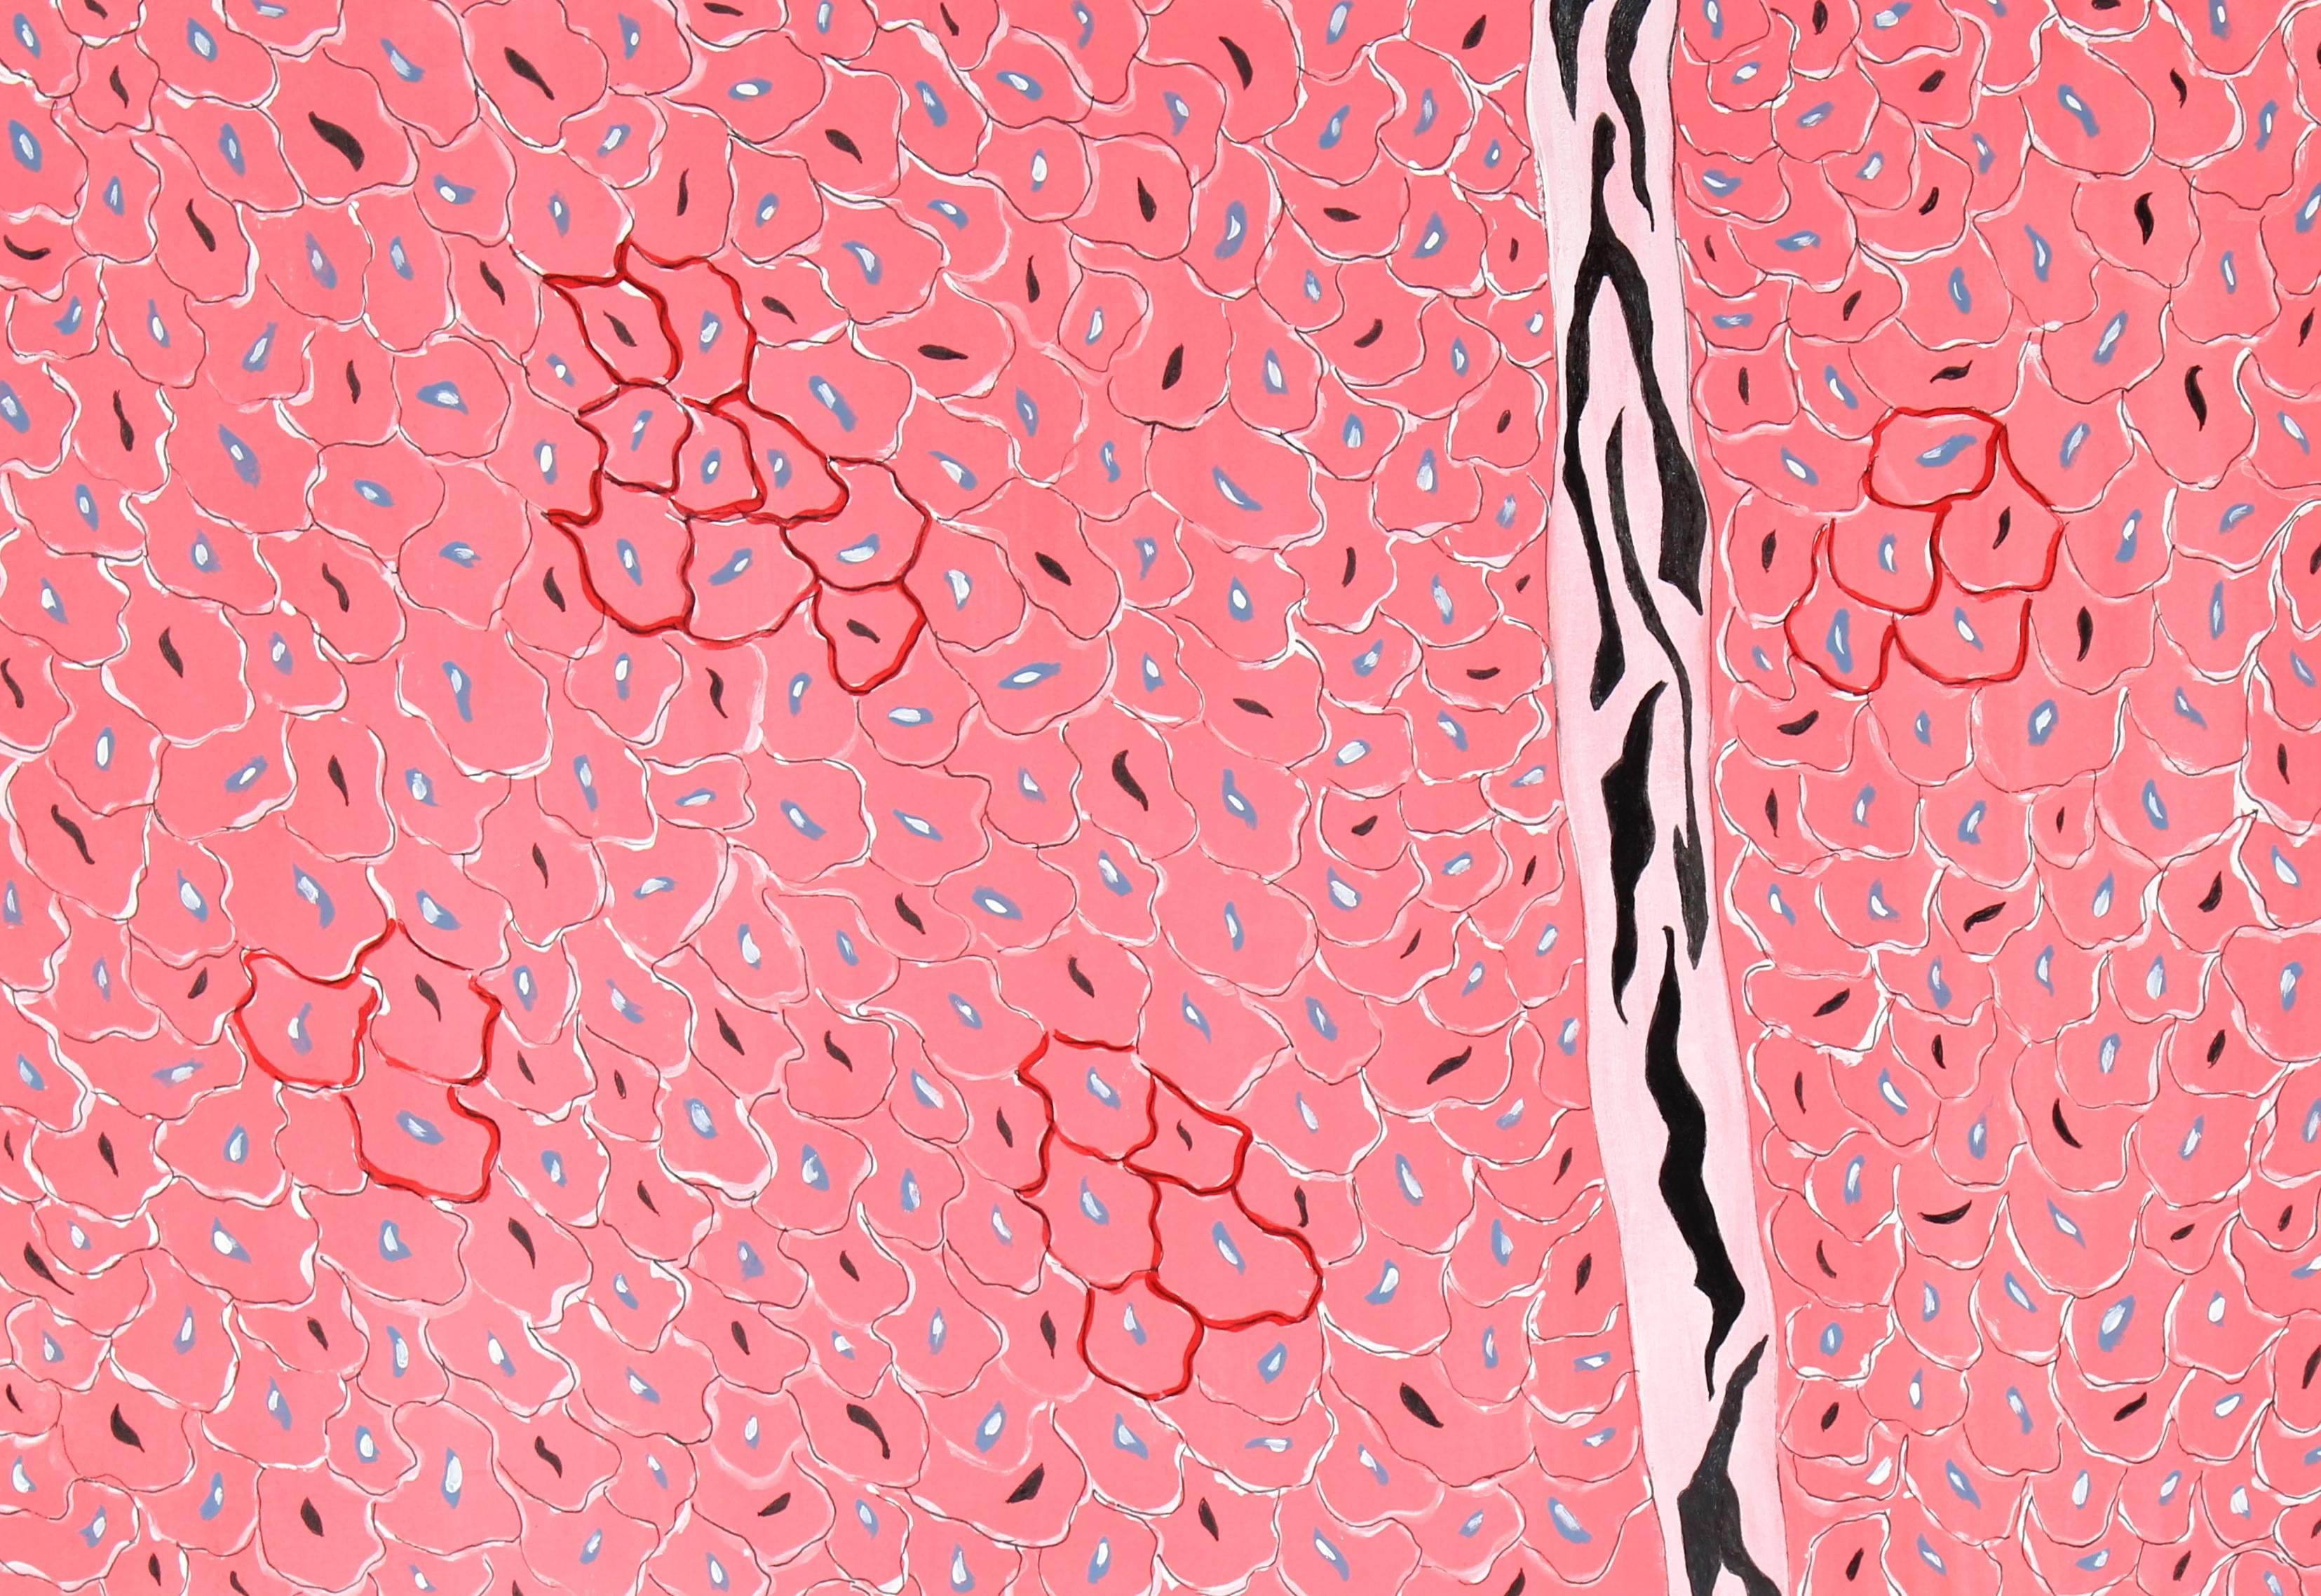 Gwen Stone Abstract Drawing - "Safari VI" Pink Abstract in Acrylic, 2001